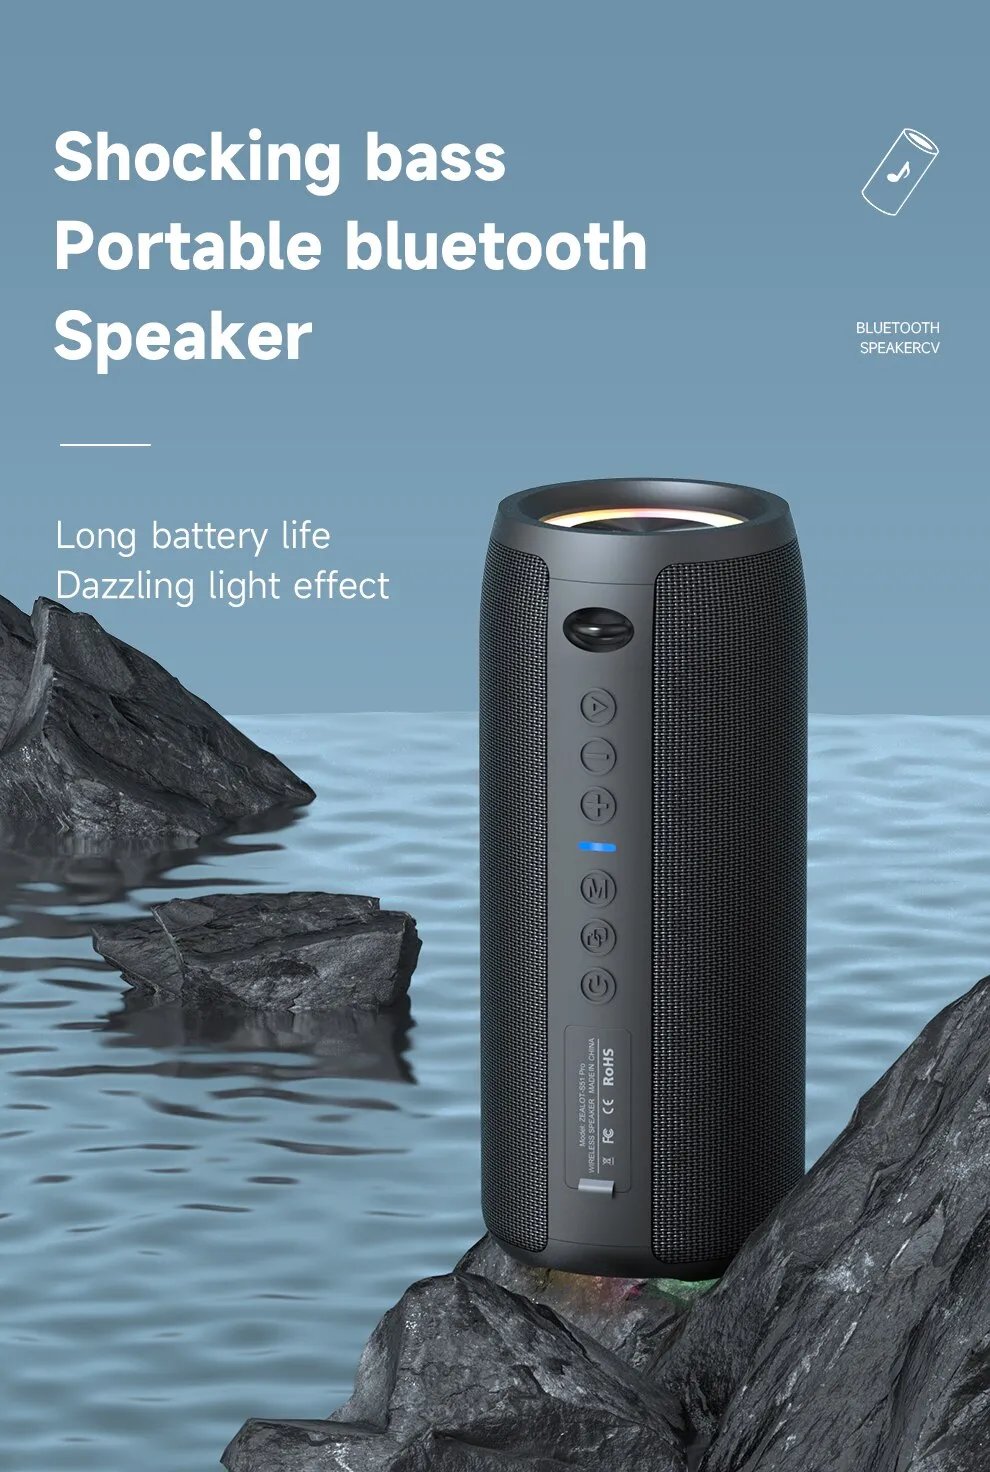 ZEALOT S51PRO 40W High-power Bluetooth Speaker 3D Stereo Bass Bluetooth Speaker Portable IPX5 Waterproof Suitable TWS Boom Box